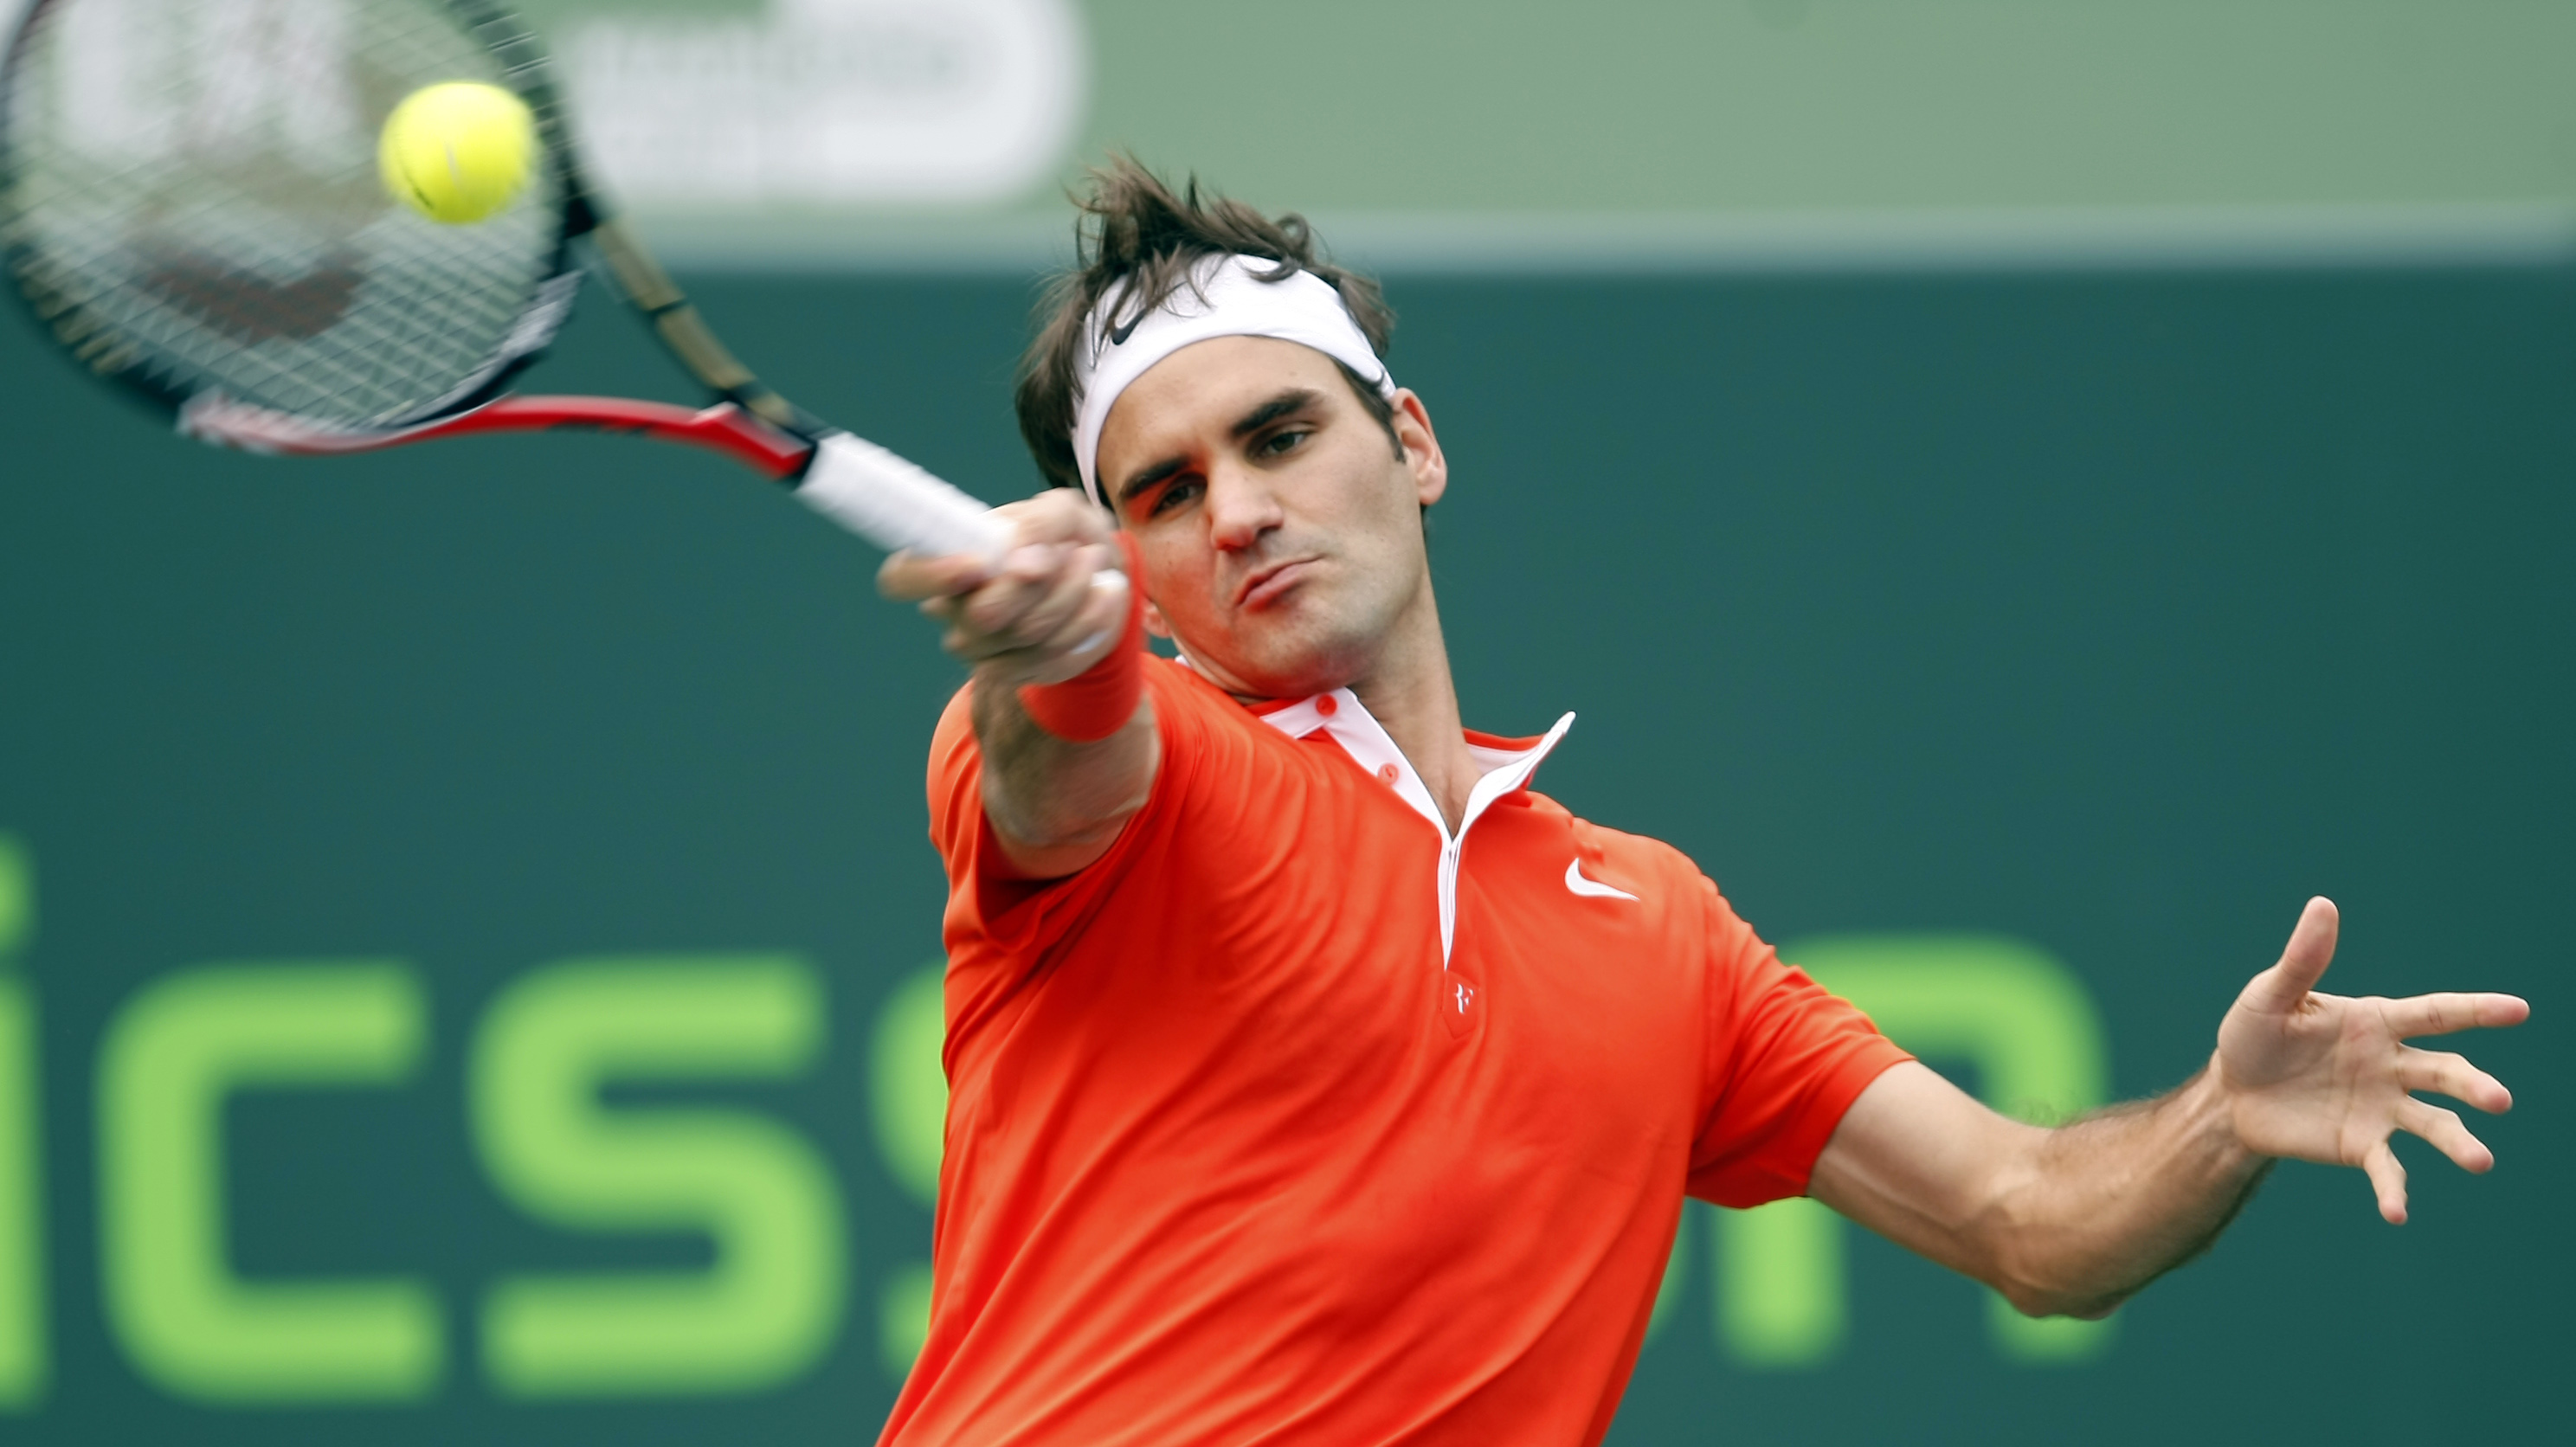 Miami, Roger Federer, Tennis, ATP